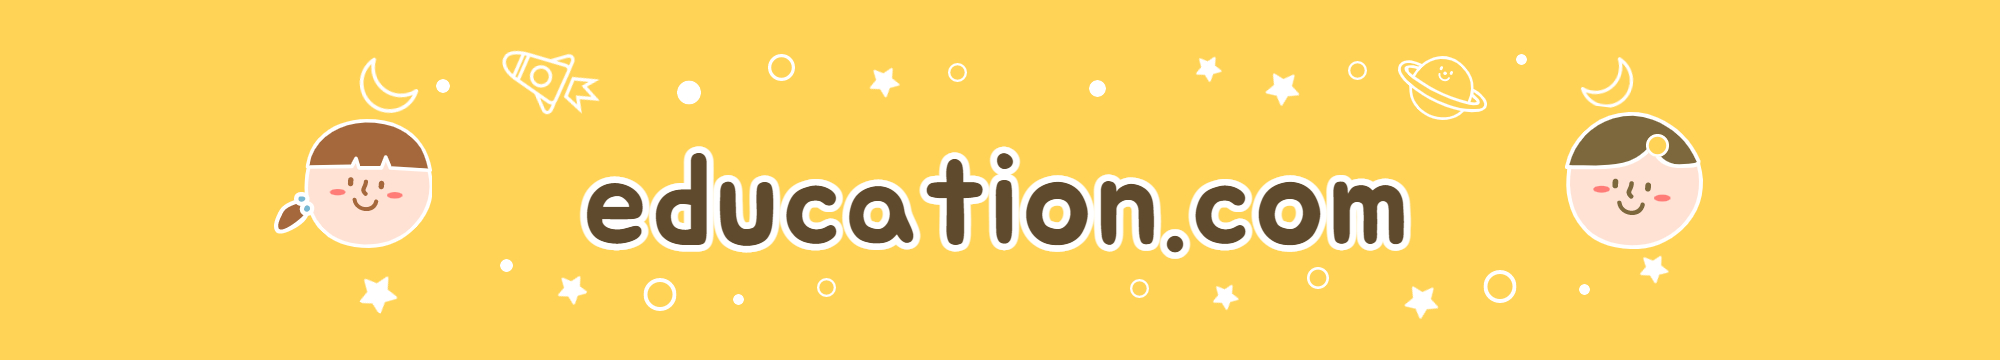 www.education.com